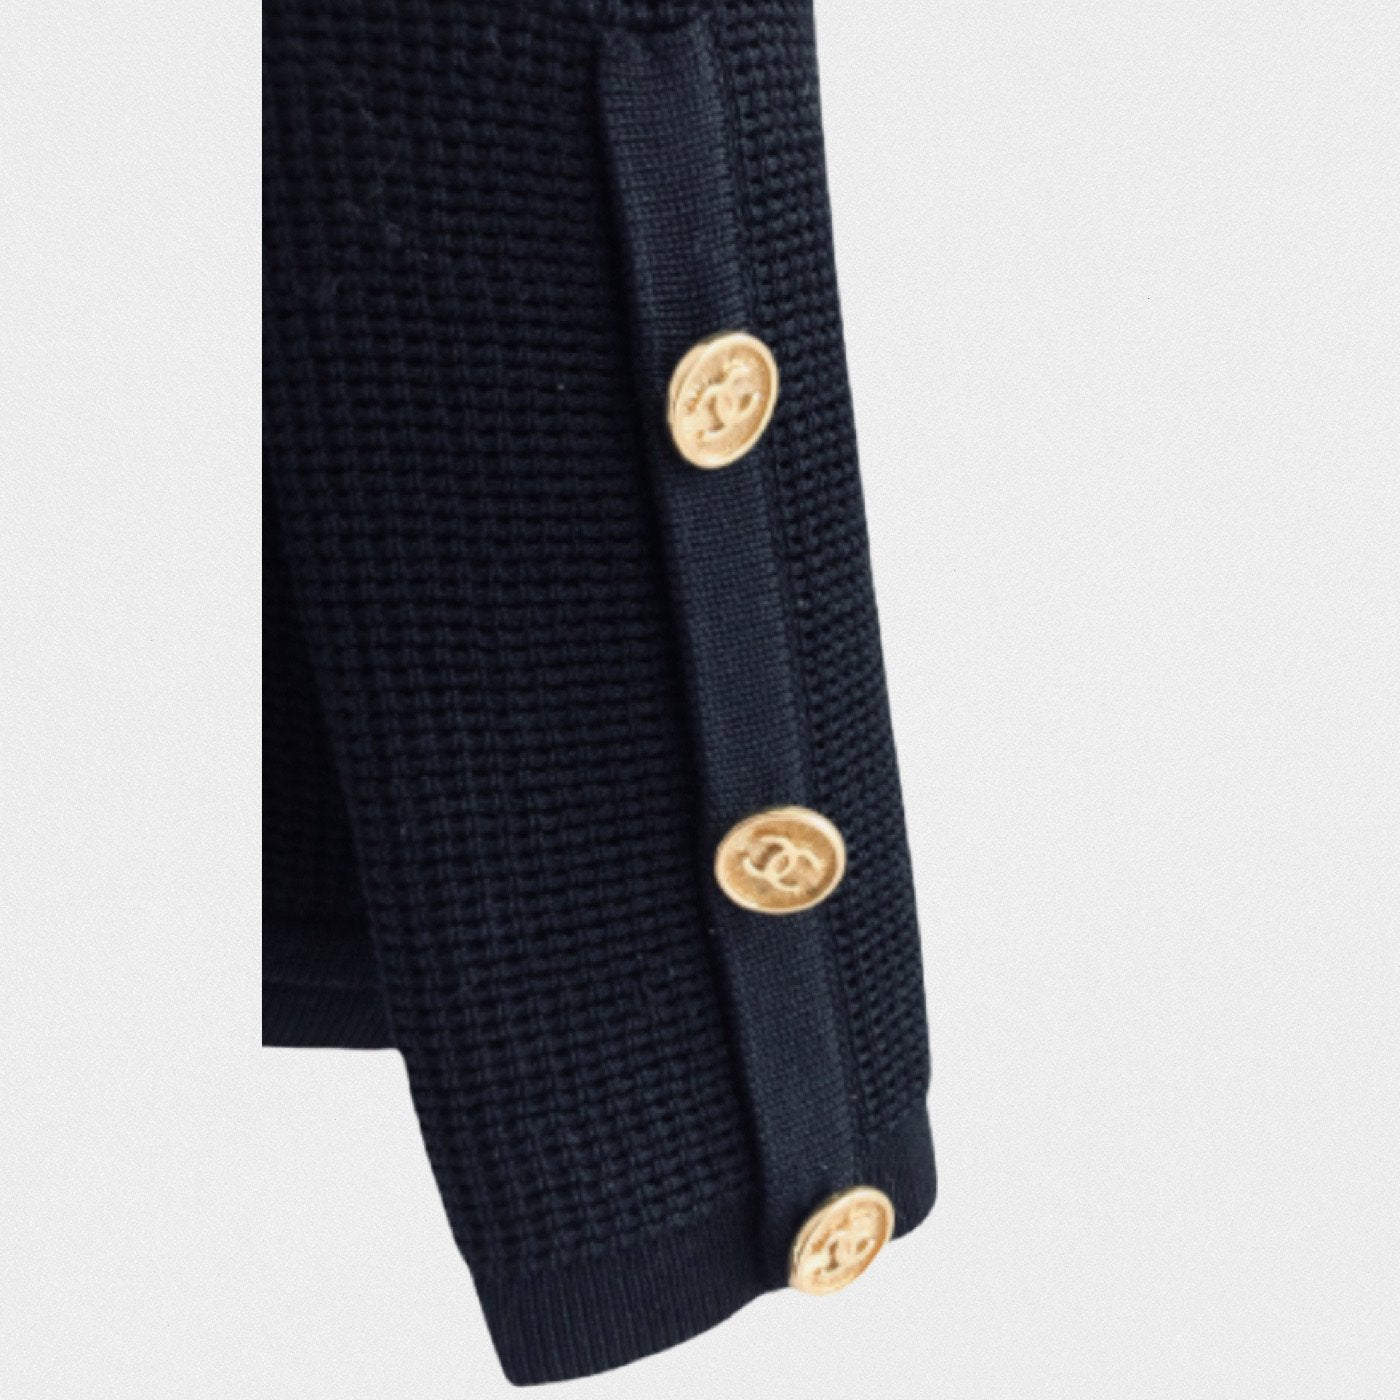 Lysis vintage Chanel knit cardigan - M - 1990s